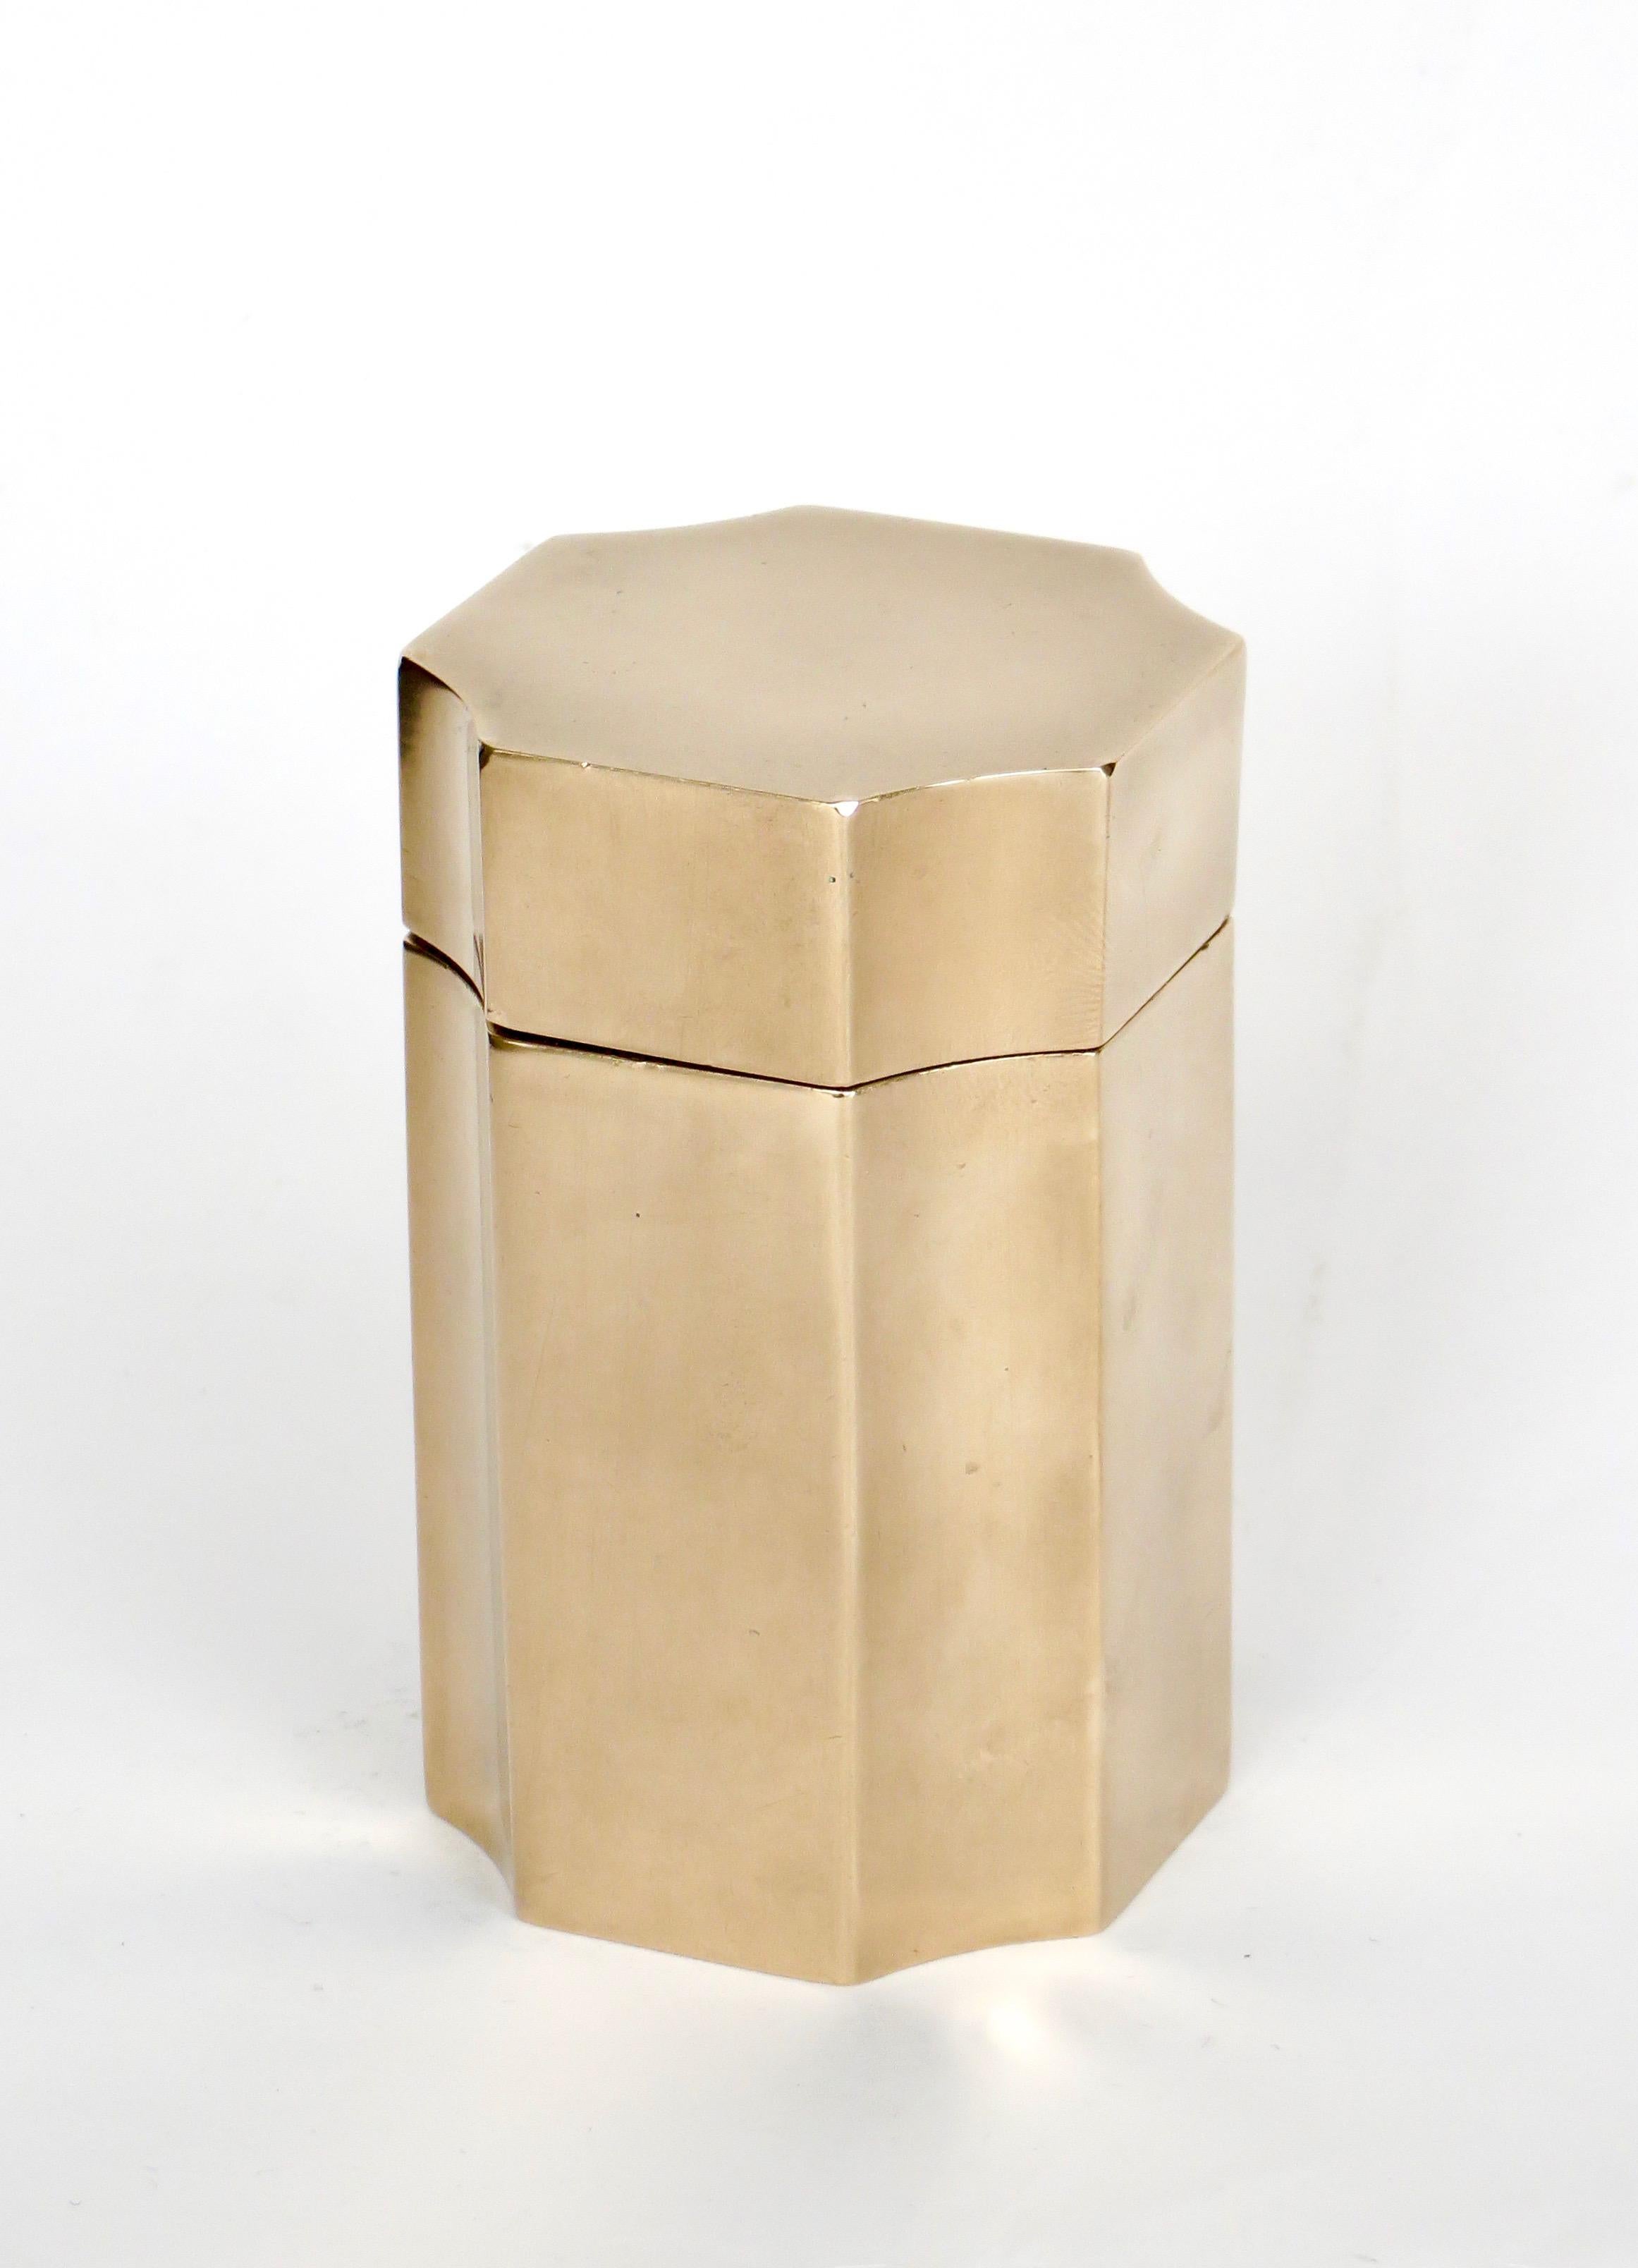 French Monique Gerber Bronze Box La Ligne Suedoise Edition by Sigward Bernadotte